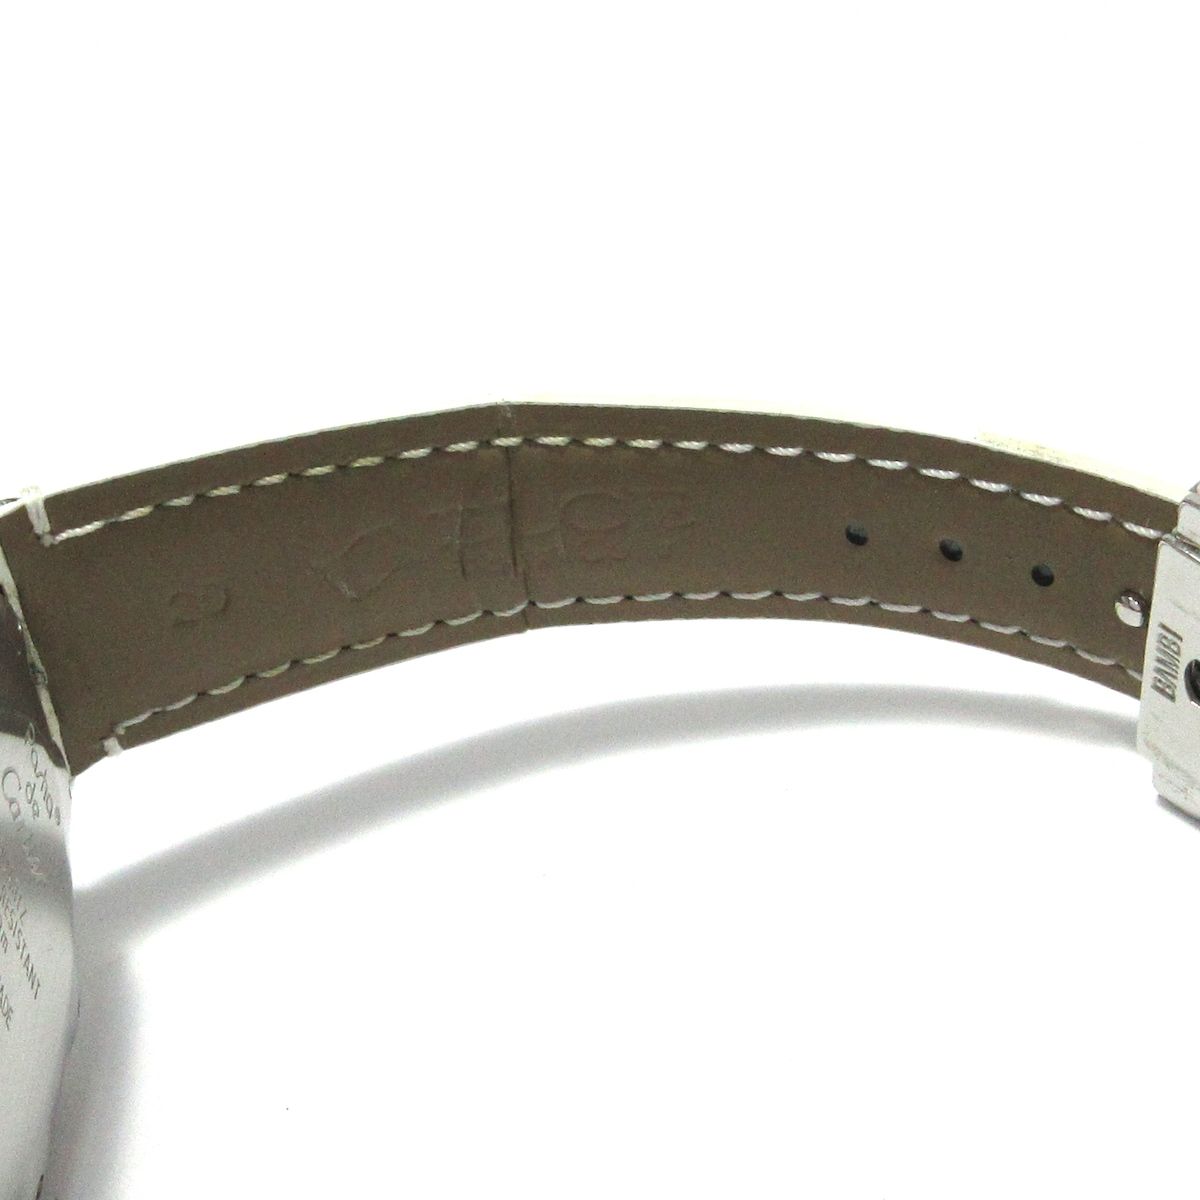 Cartier(カルティエ) 腕時計 パシャ38 W3100355 メンズ SS/社外革 